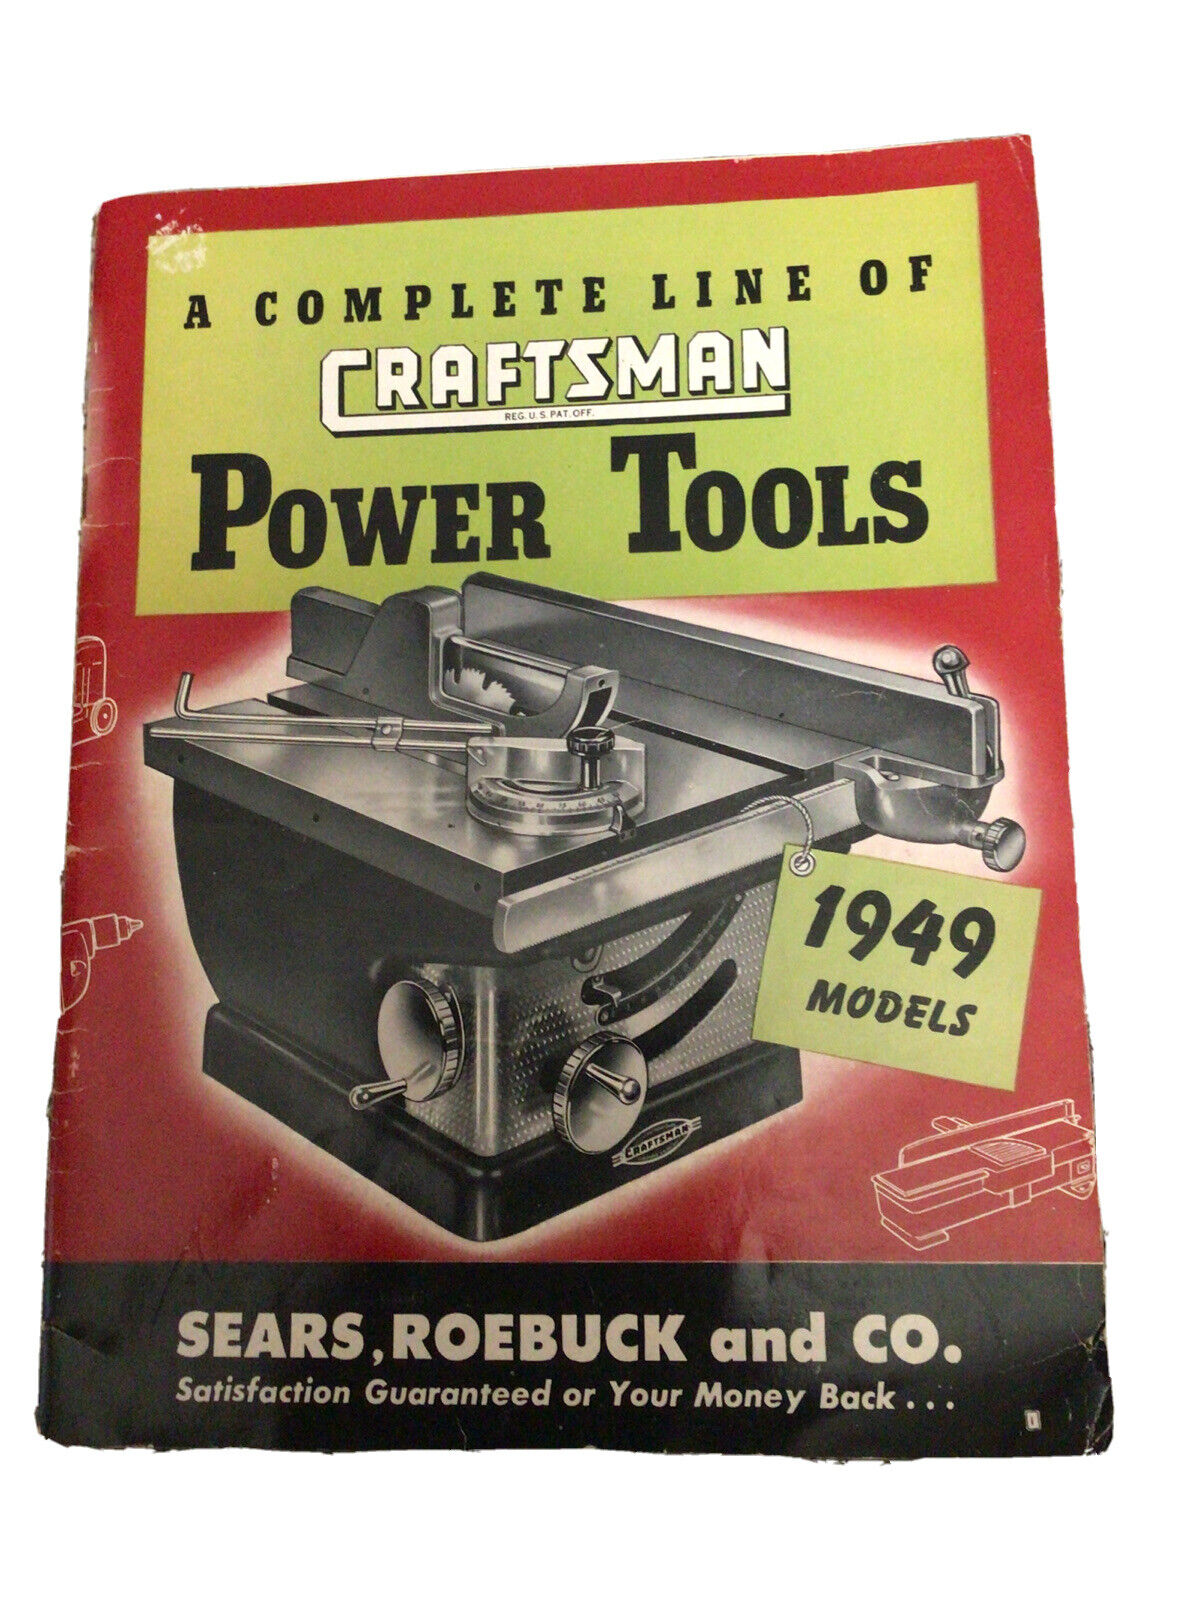 Original / Vintage Sears Roebuck & Co. Craftsman Power Tools Catalog 1949 Models